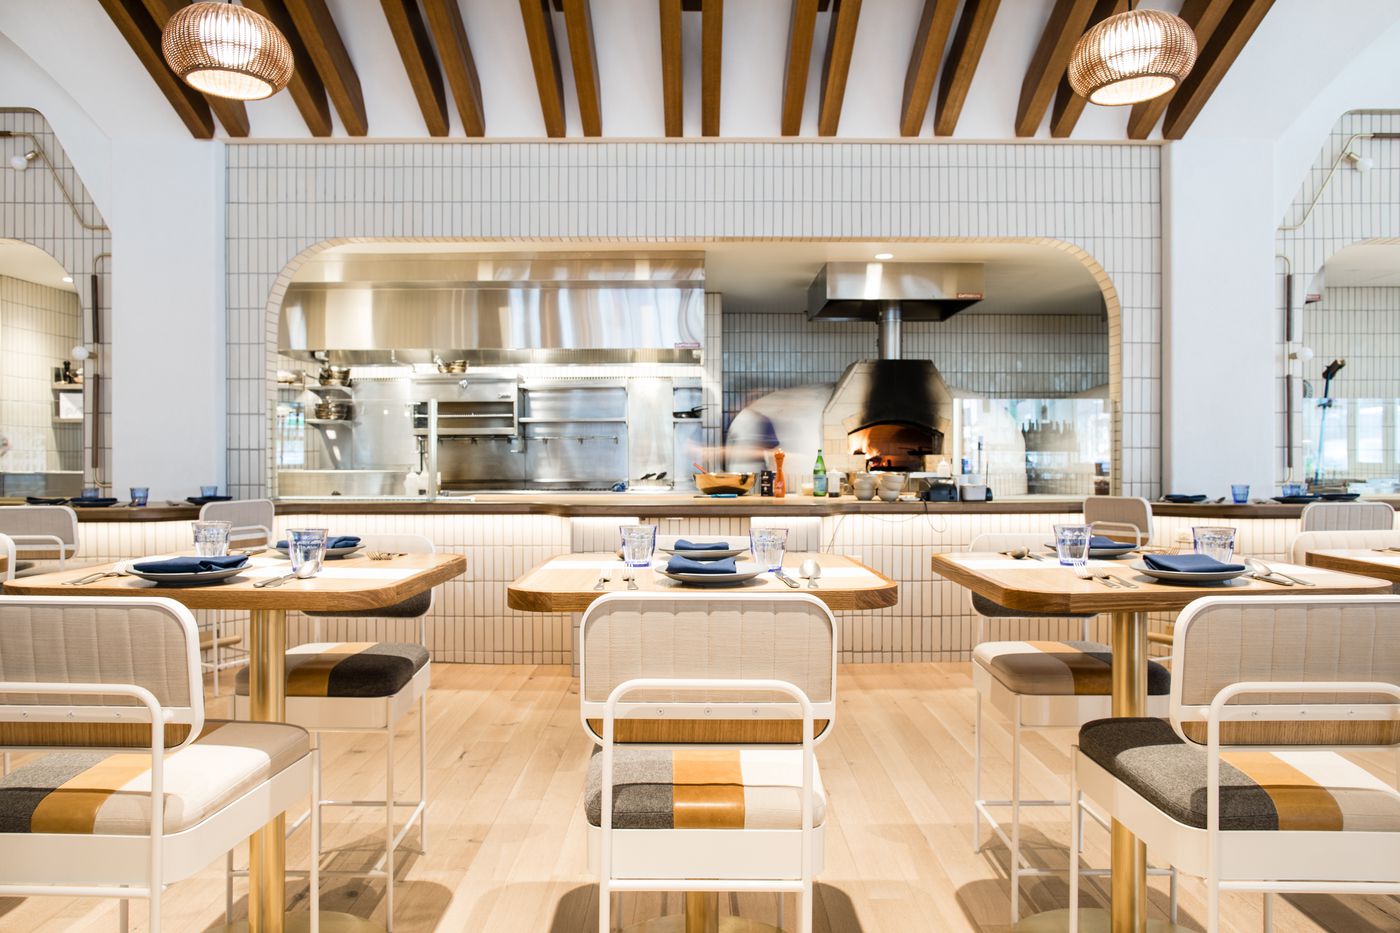 California Inspired Design Takes Over Restaurant Dining Rooms Eater